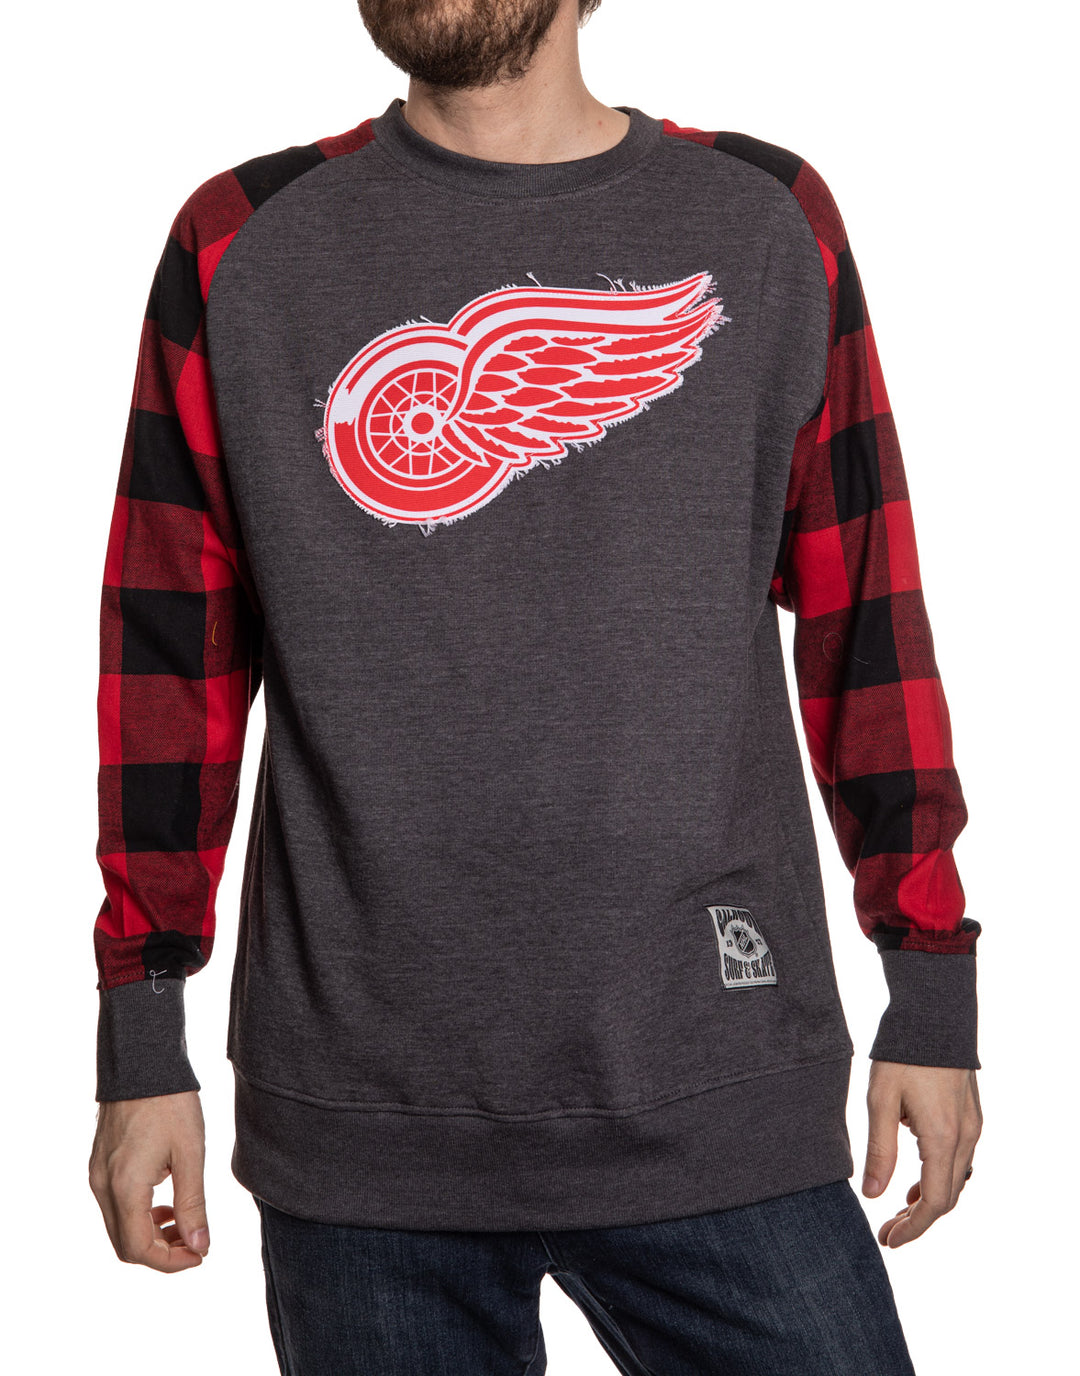 Licensed NHL Detroit Red Wings Buffalo Plaid sweatshirt